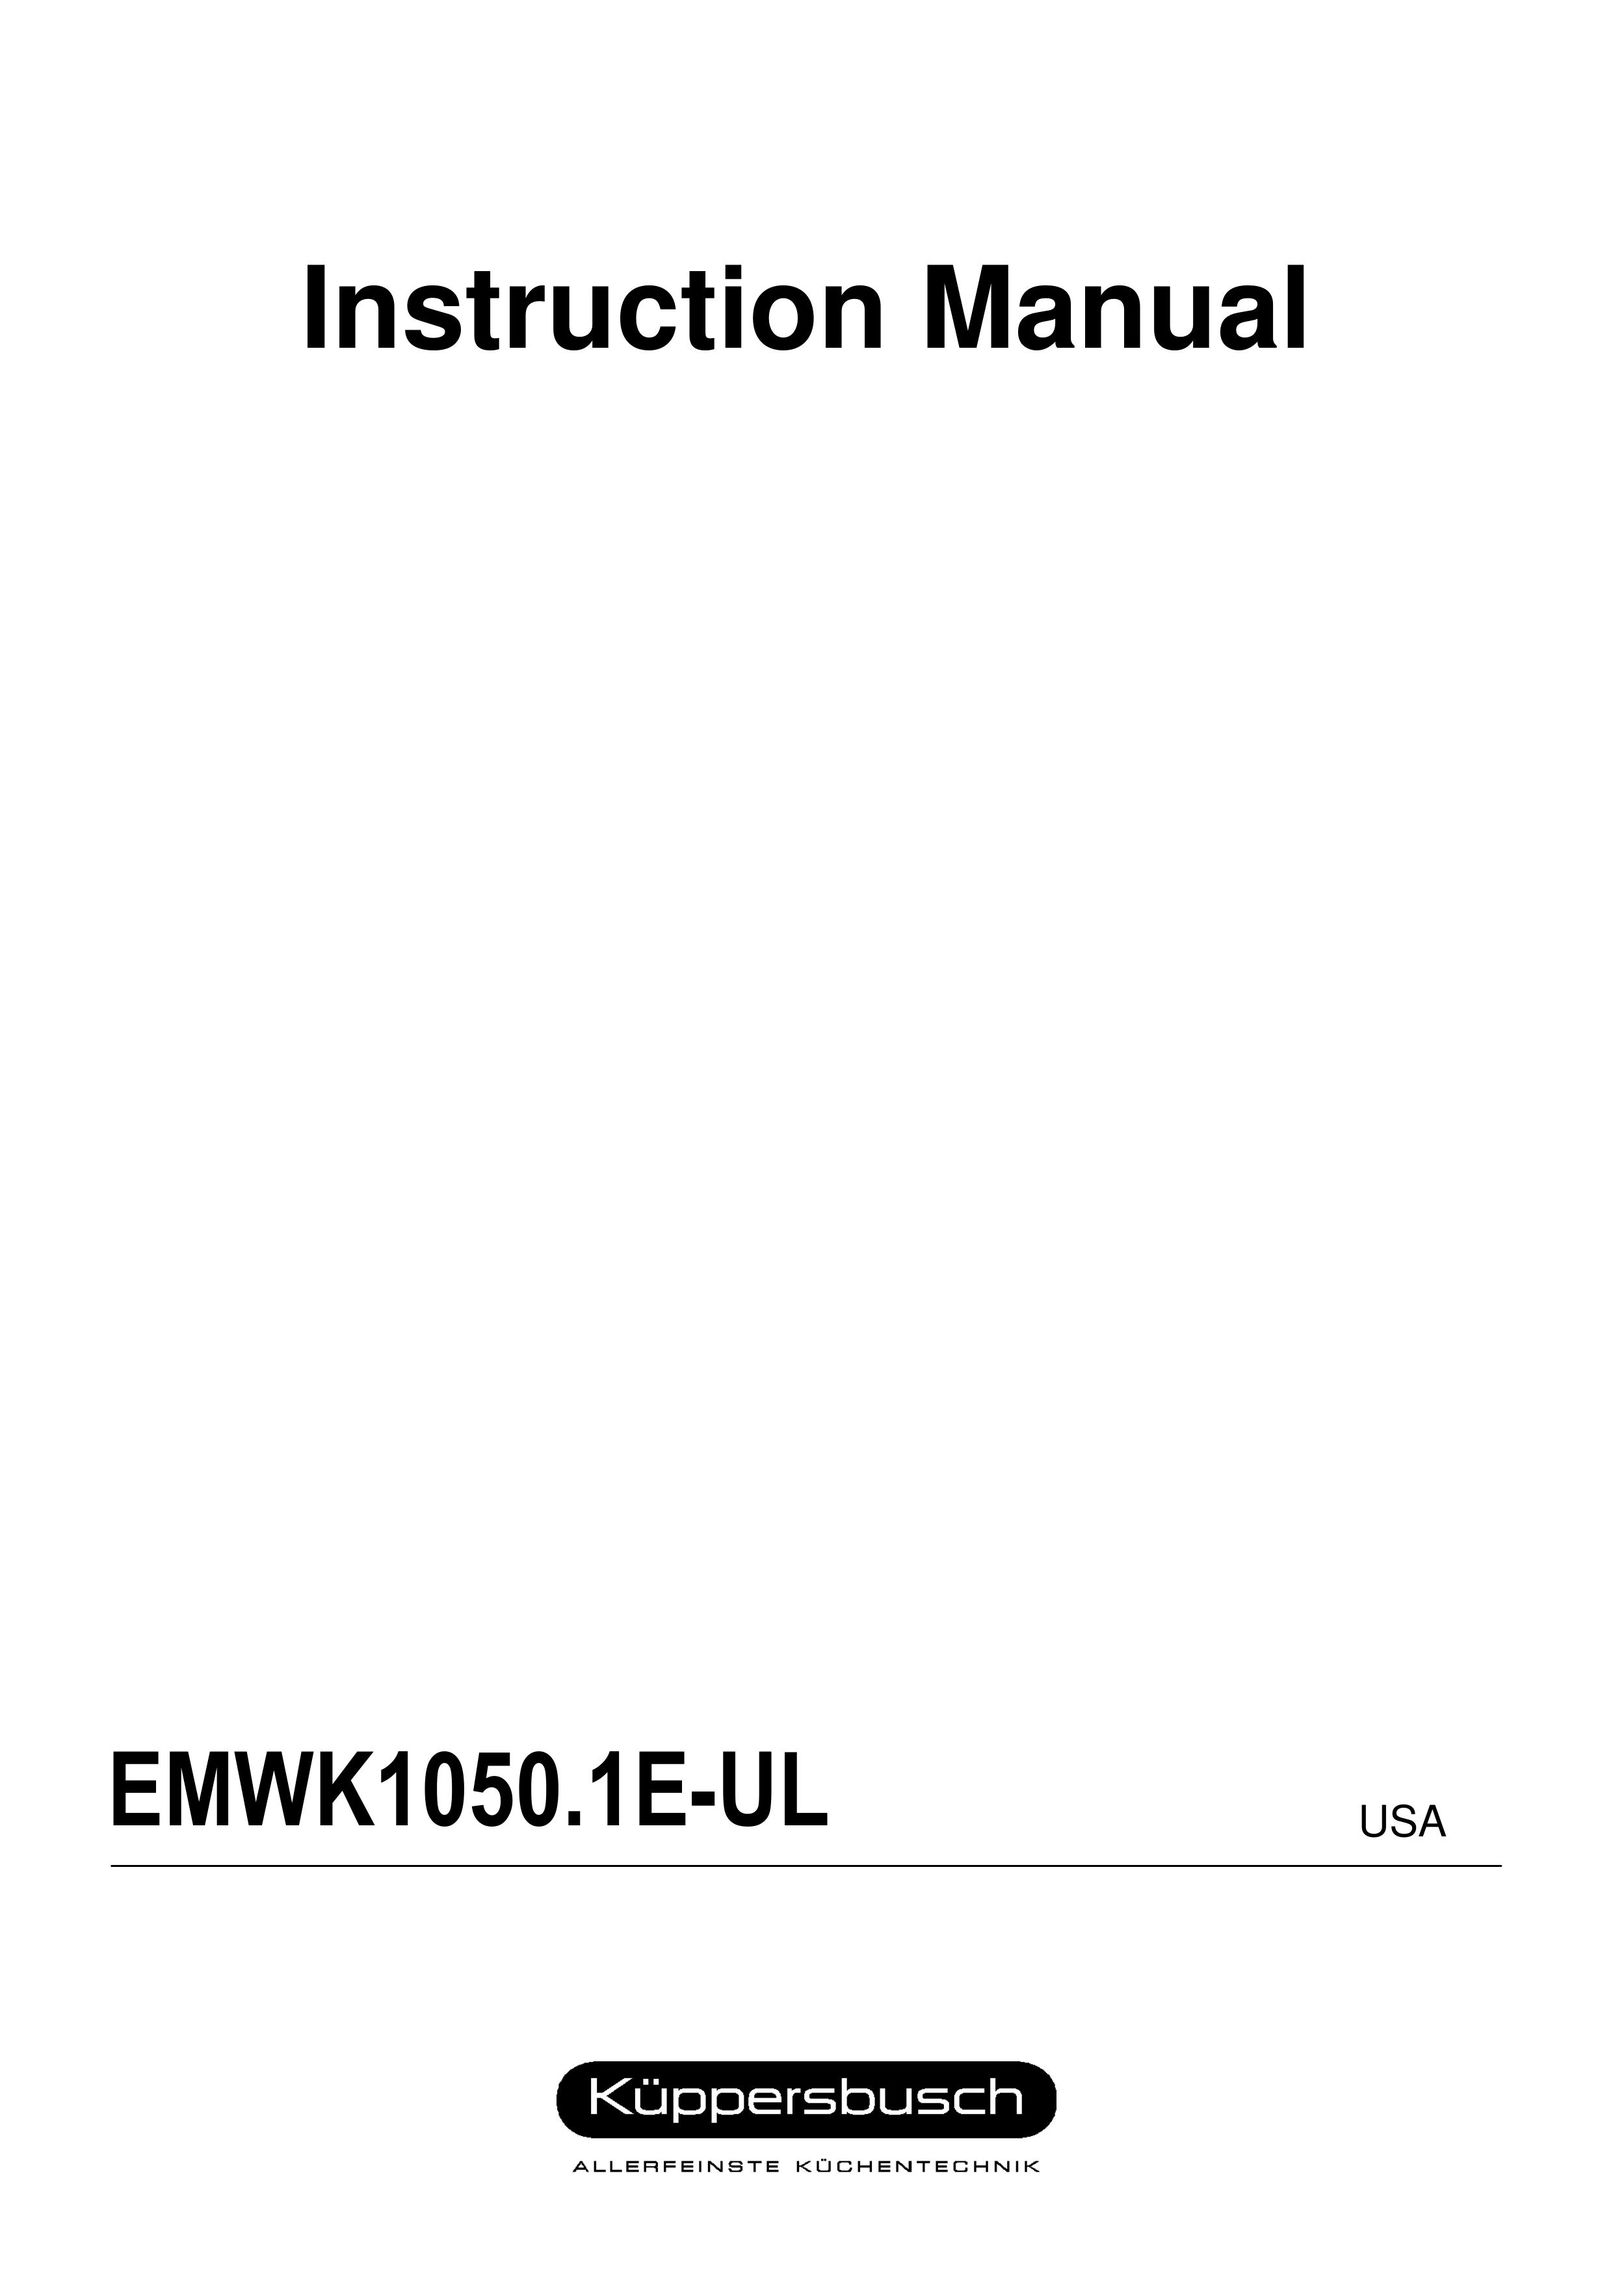 Kuppersbusch USA EMWK1050.1E-UL Microwave Oven User Manual